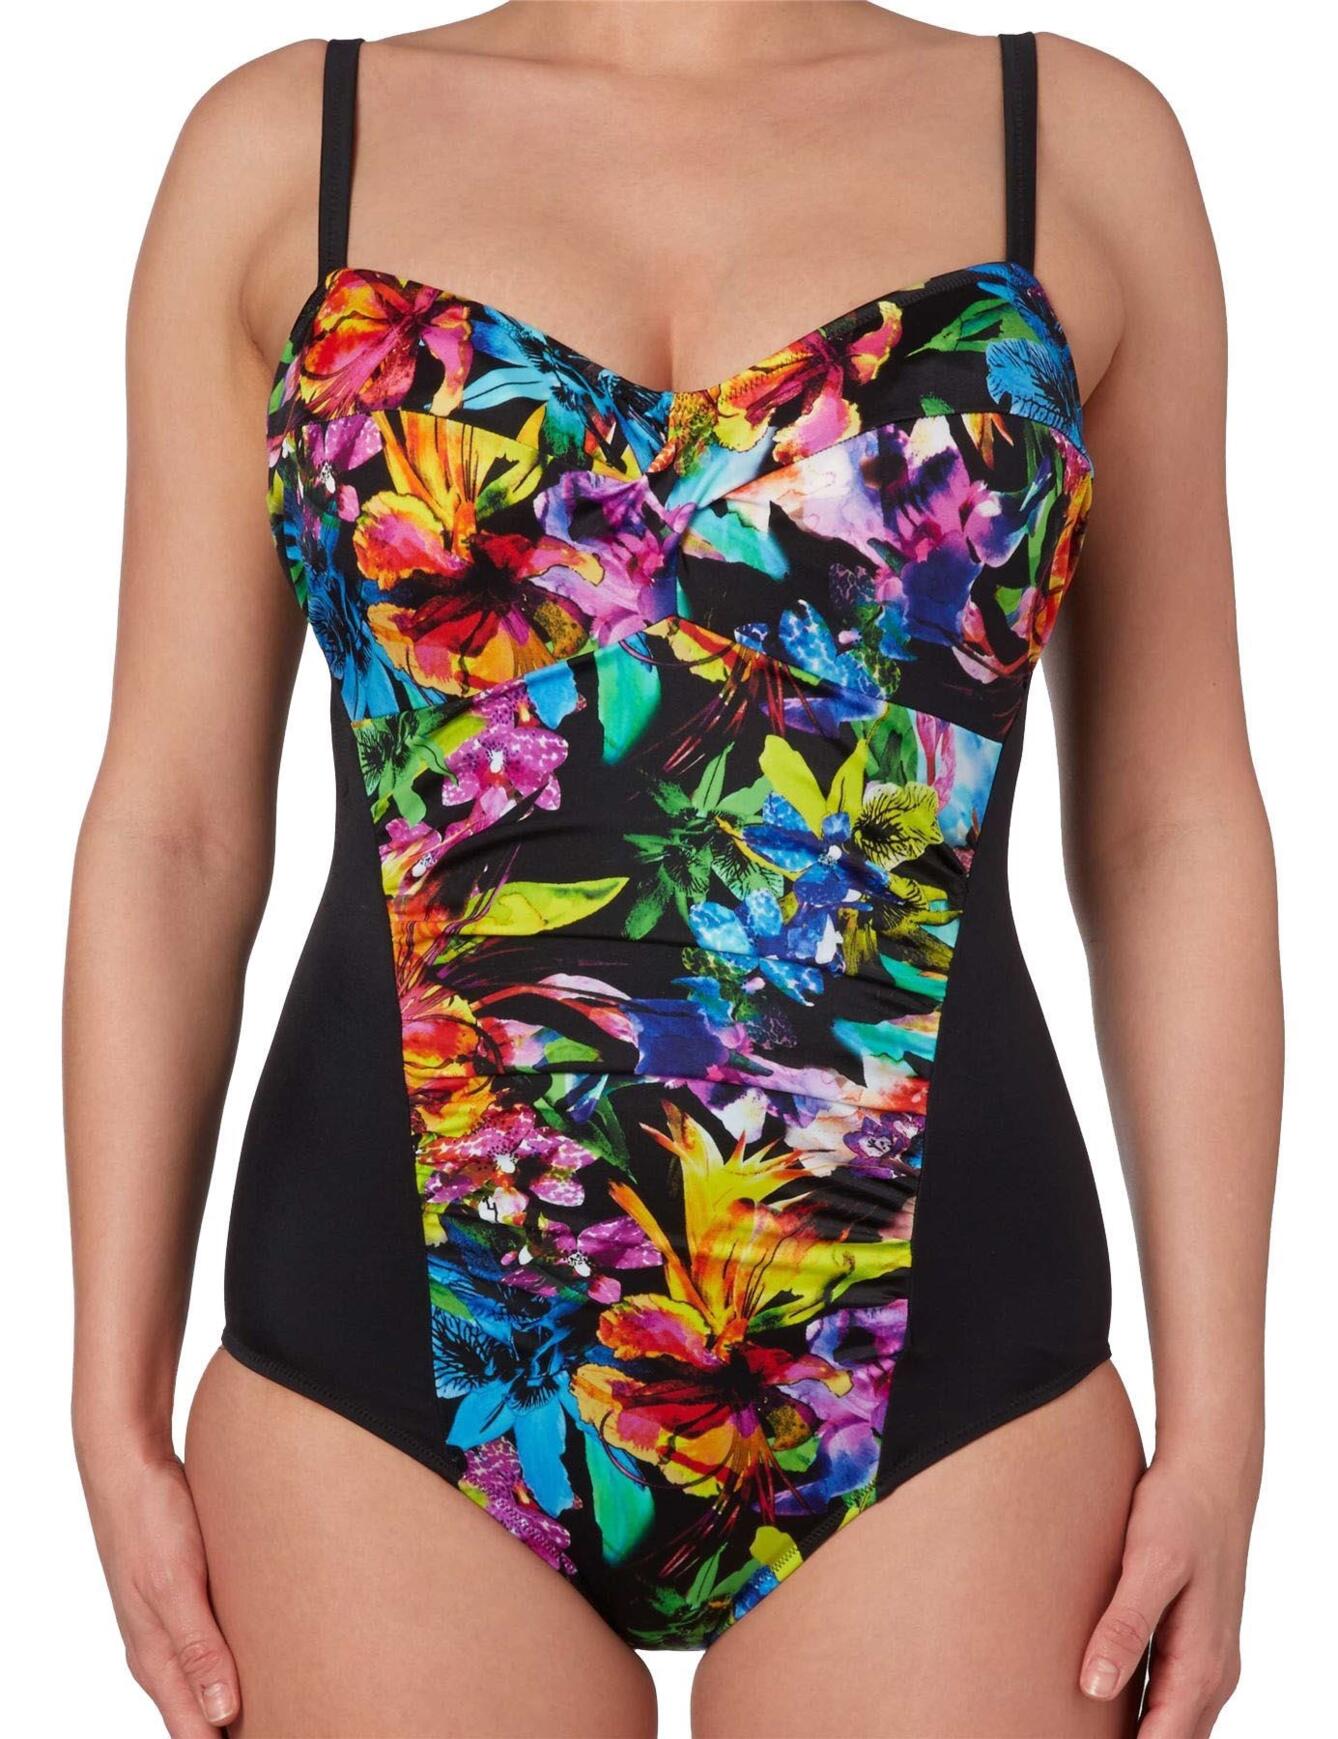 Fantasie Swimwear Santa Rosa 5454 Gathered Swimsuit - Multi